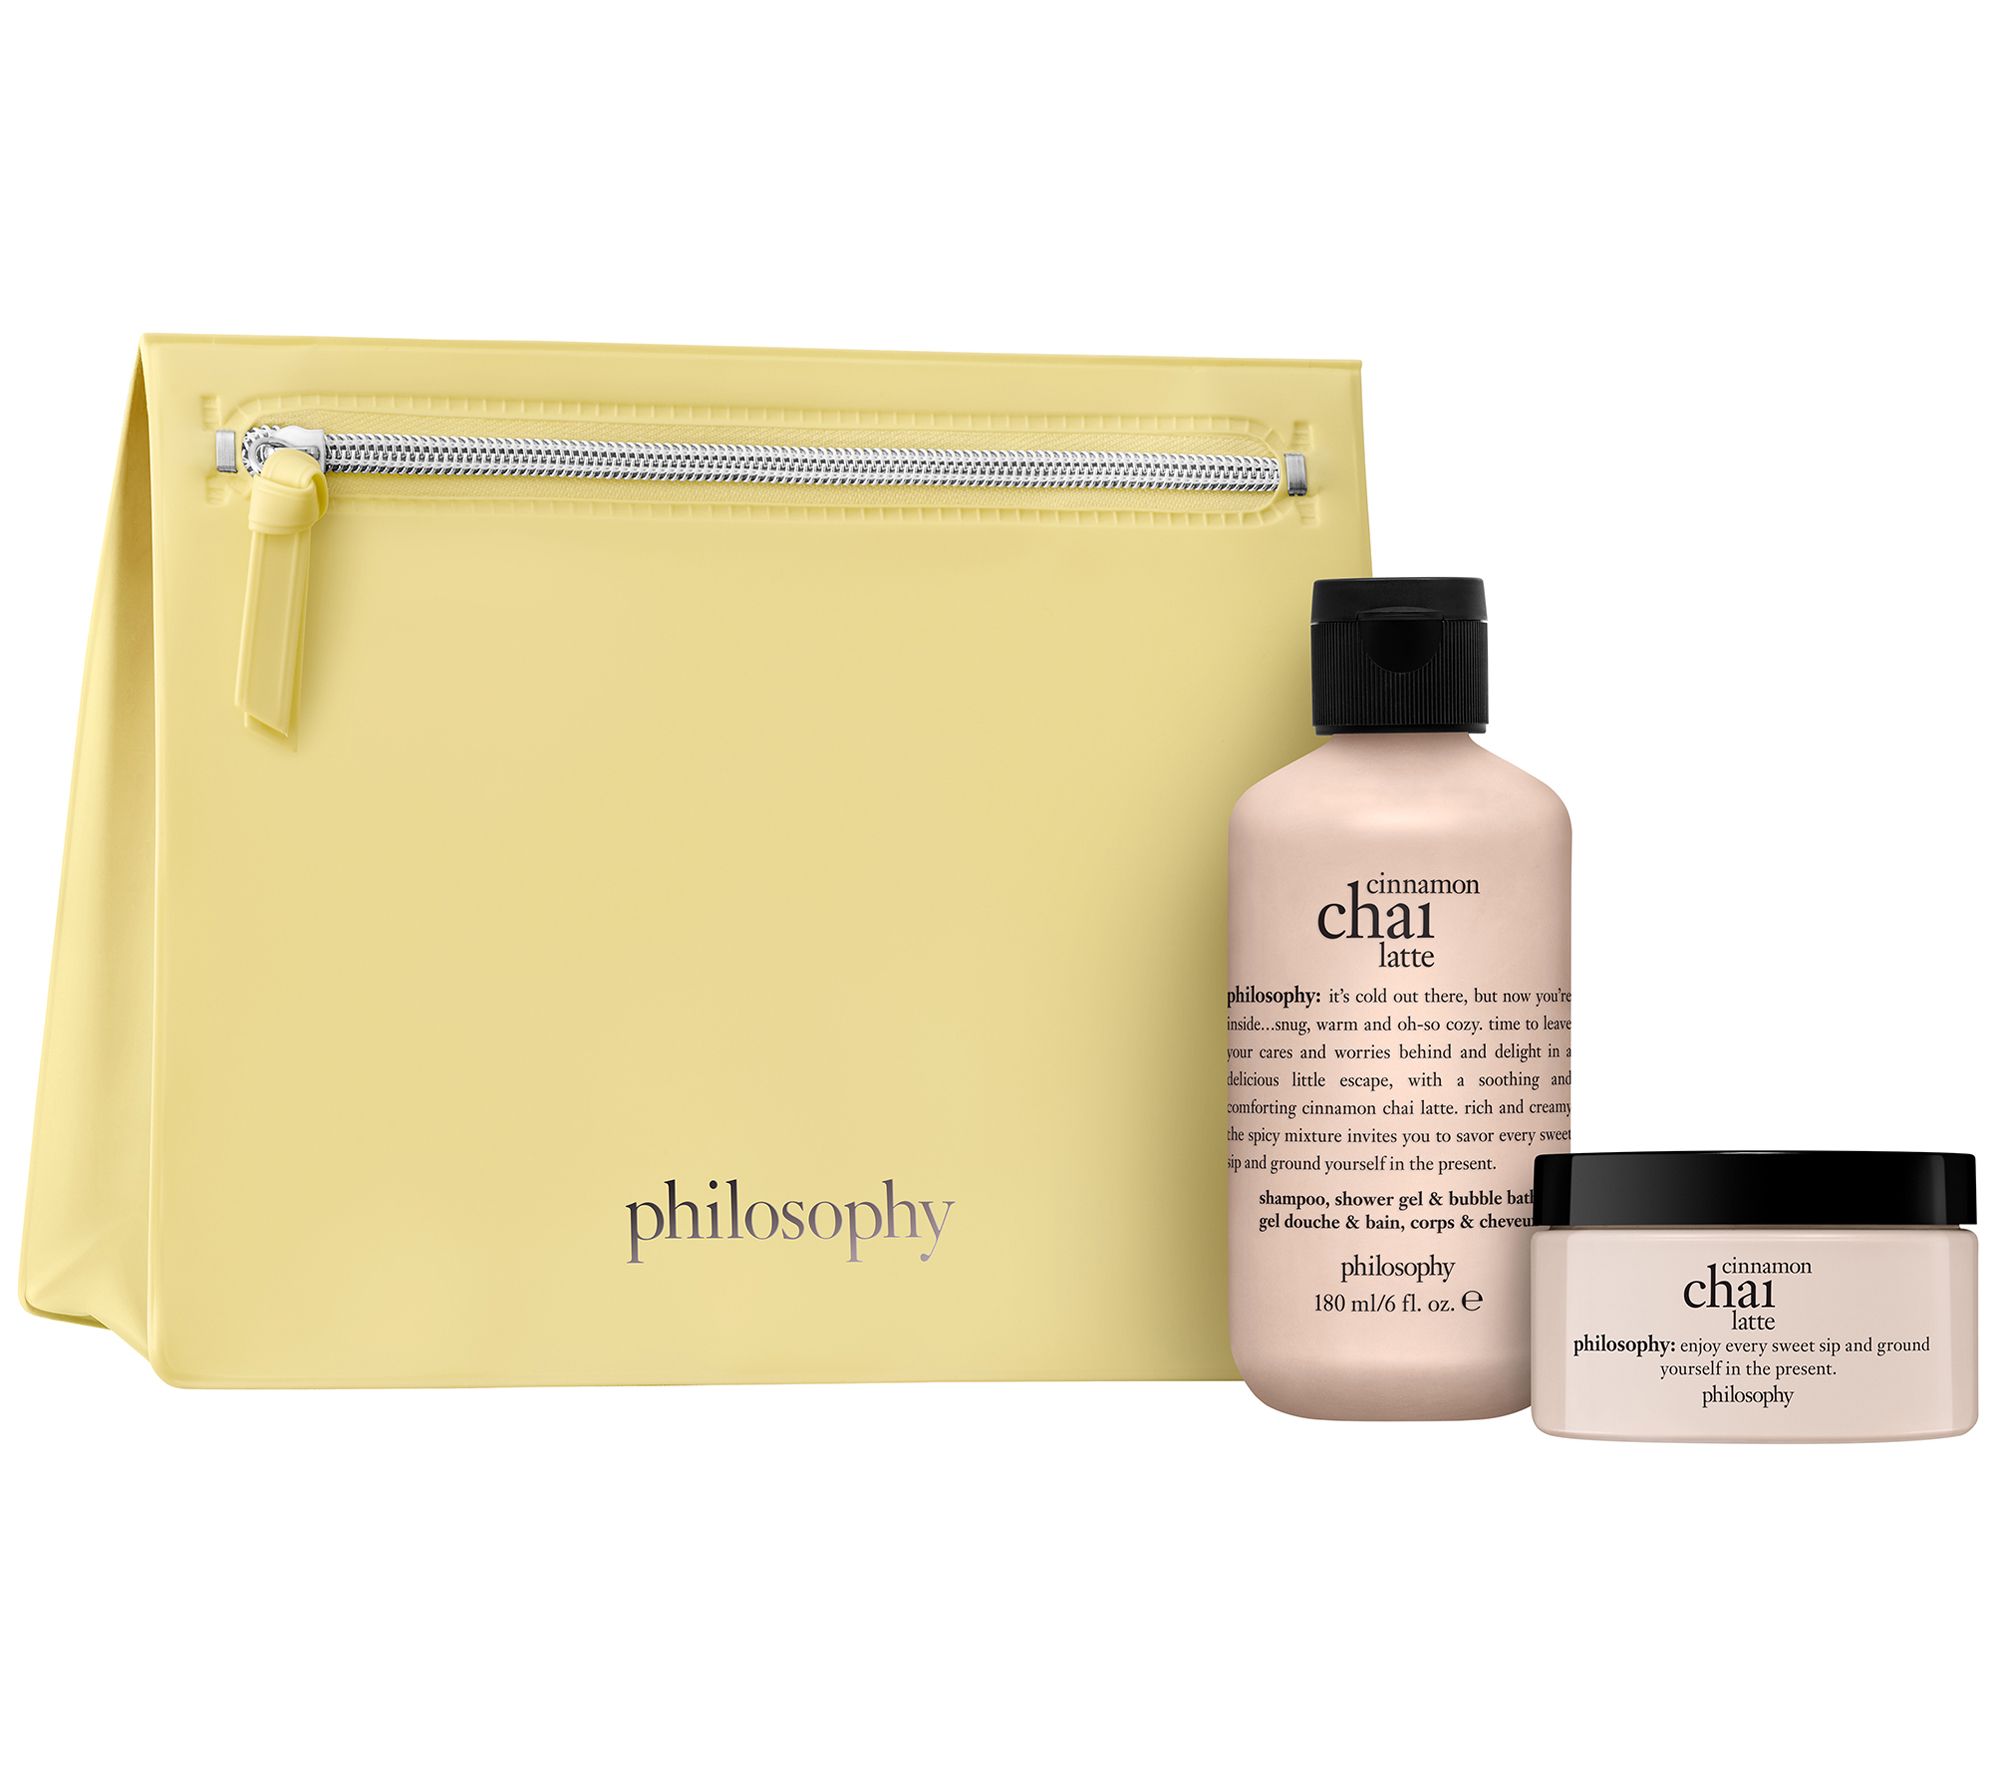 philosophy mini bath & body gifting set